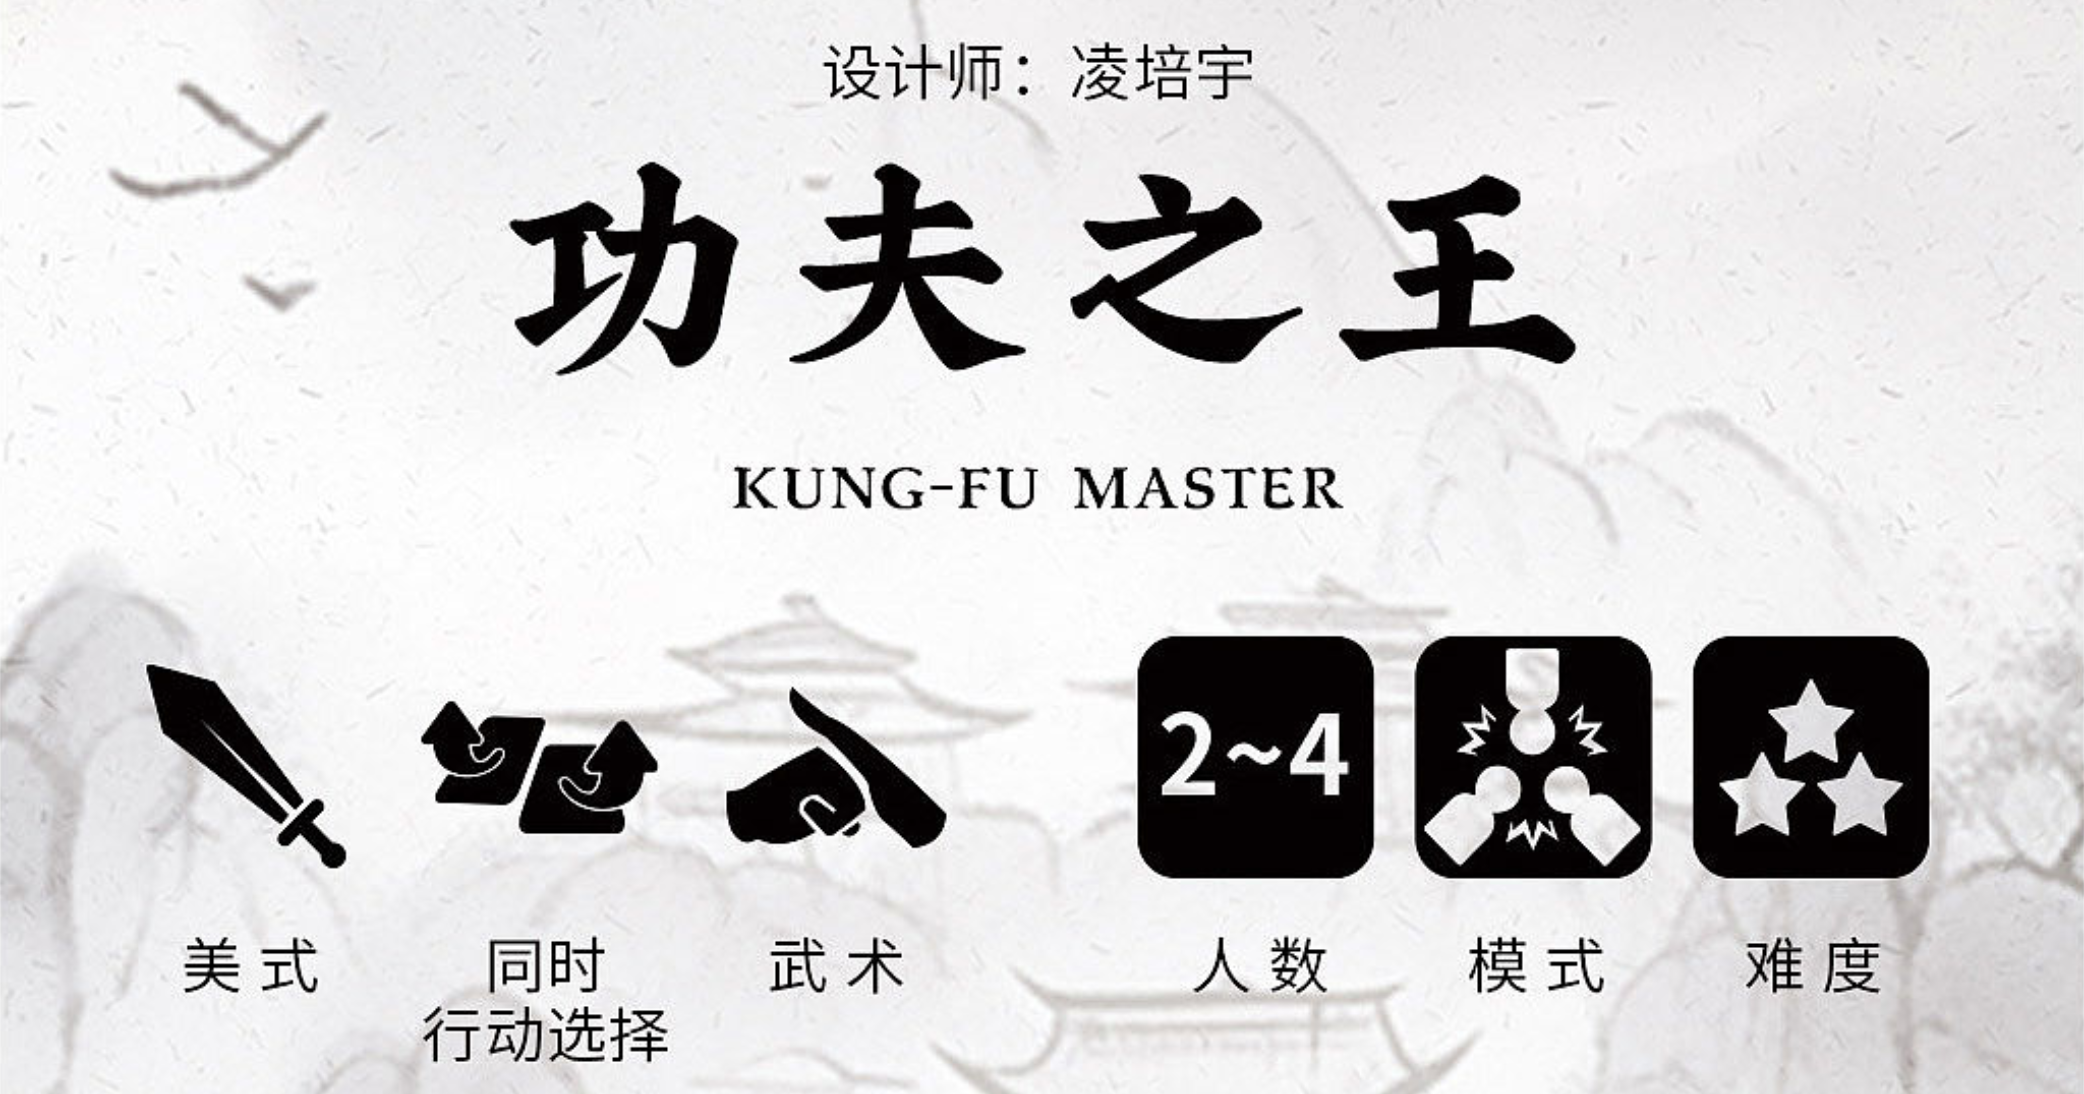 Kung-fu Master: Prototype Version